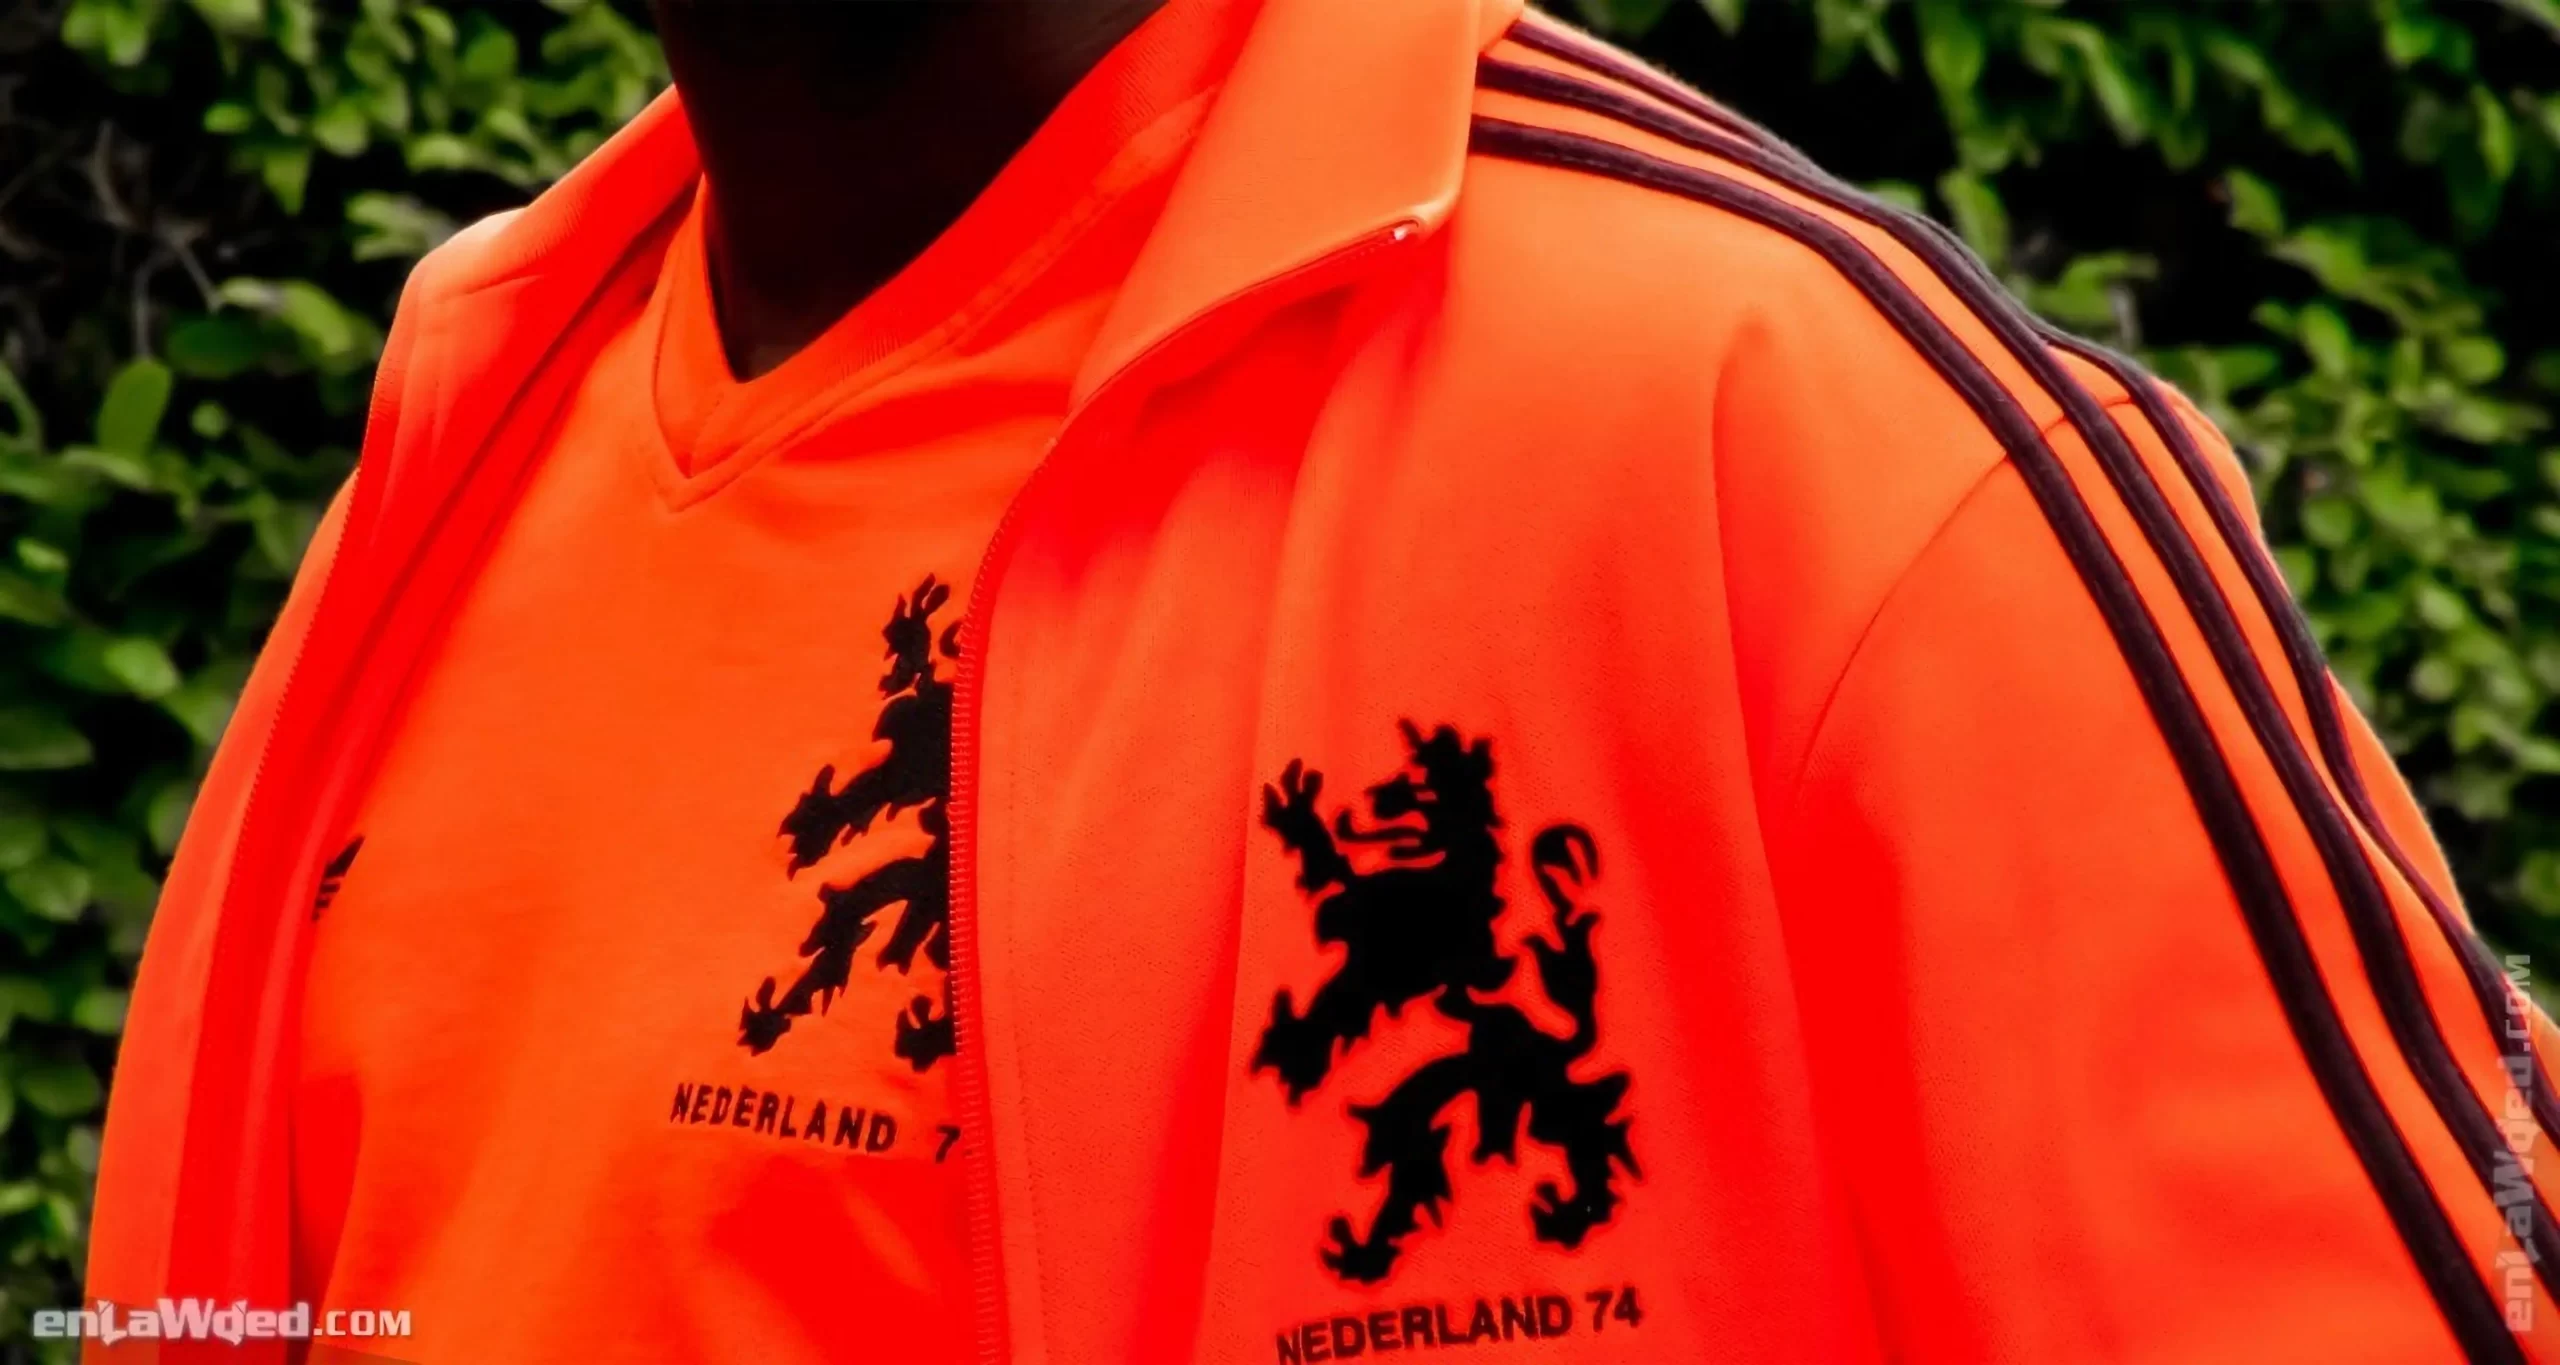 Men’s 2005 Netherlands ’74 Total Football TT by Adidas: Conscientious (EnLawded.com file #lmc47jm3zn6fx1tsjqh)